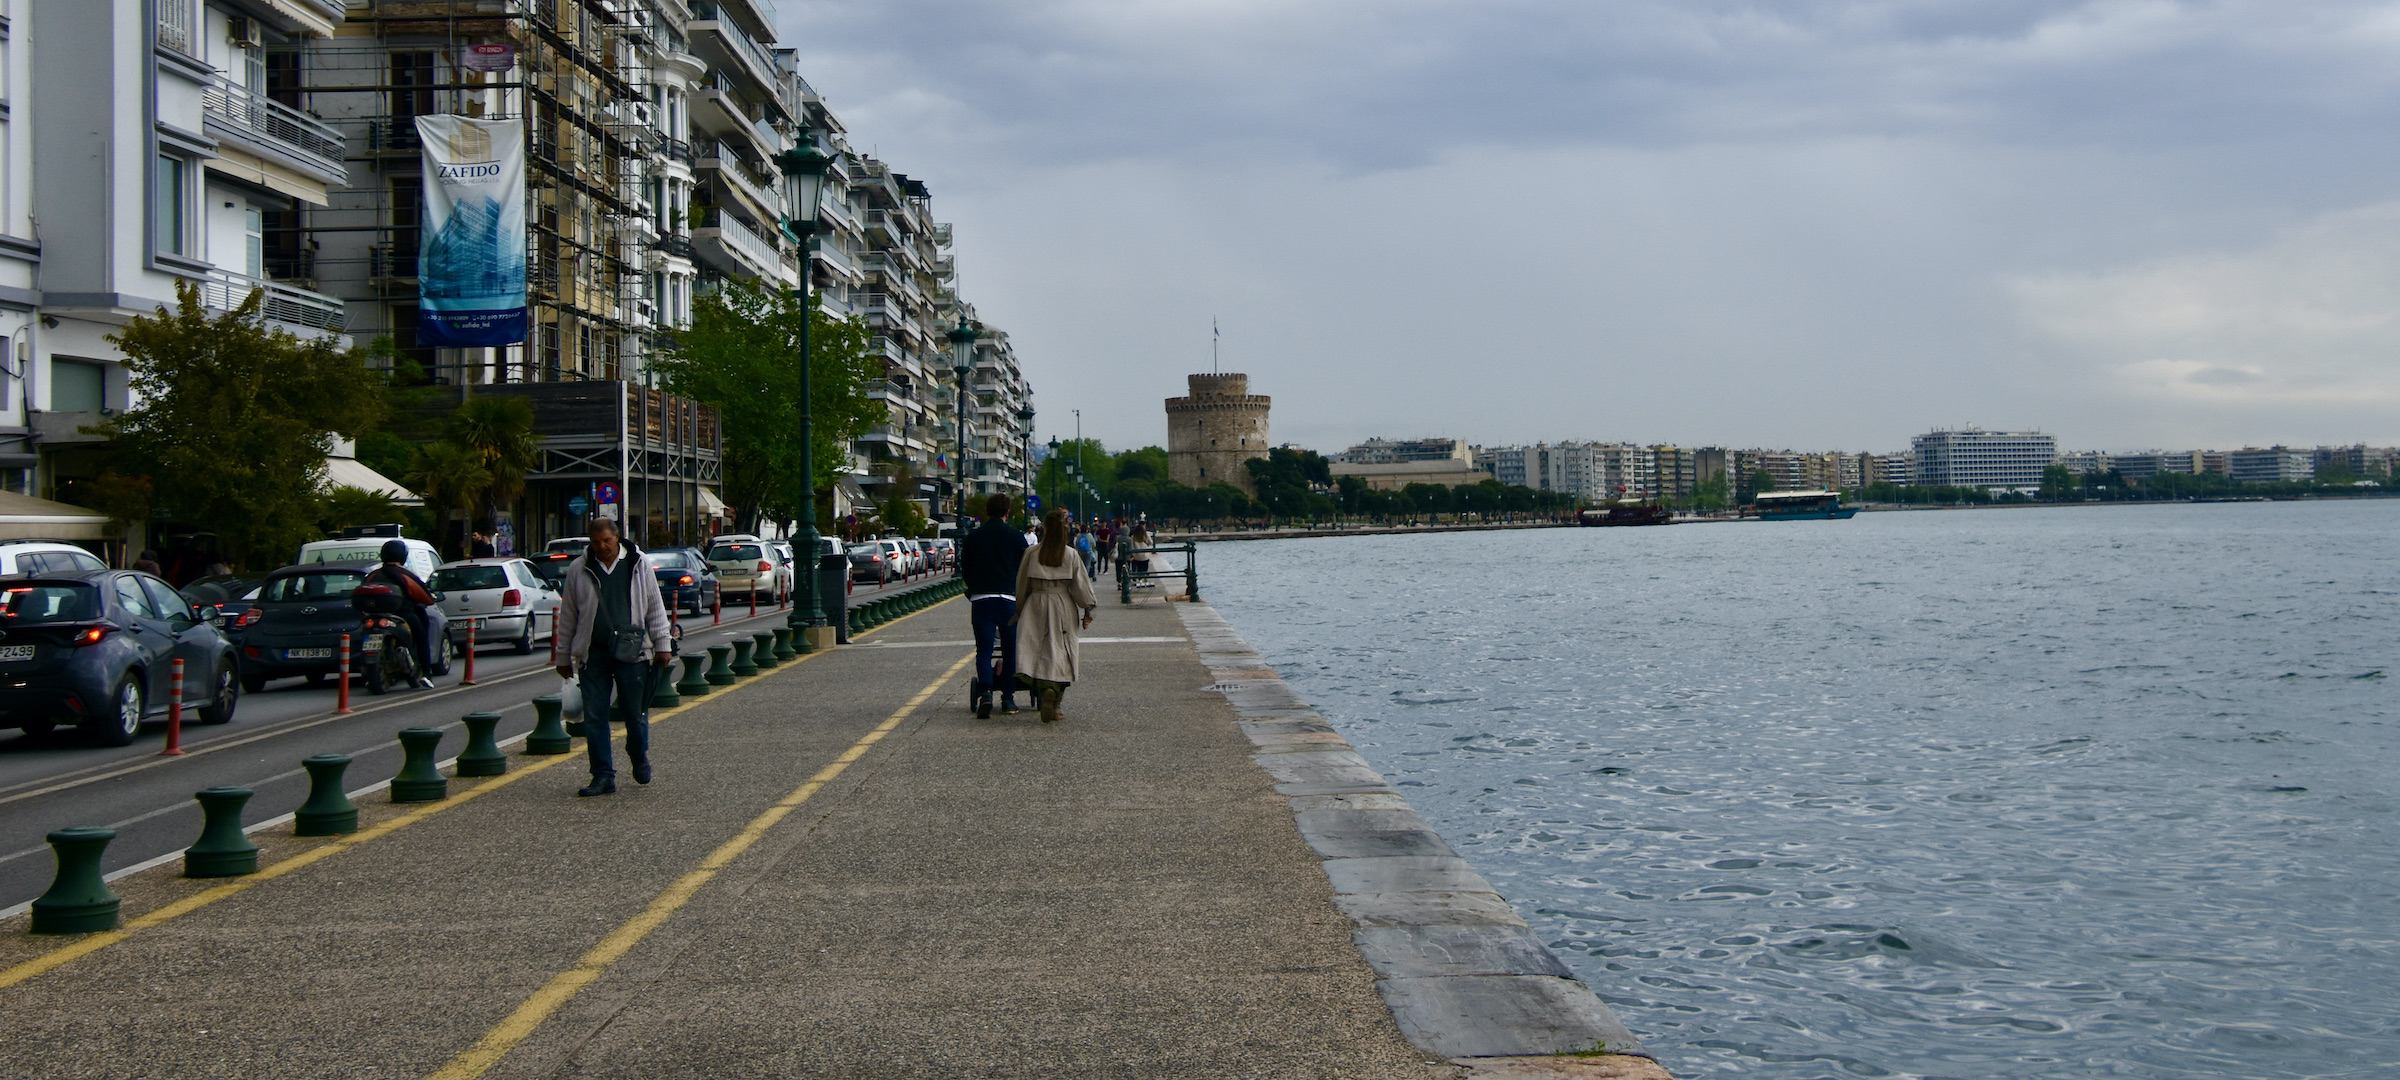 The Thessaloniki Promenade